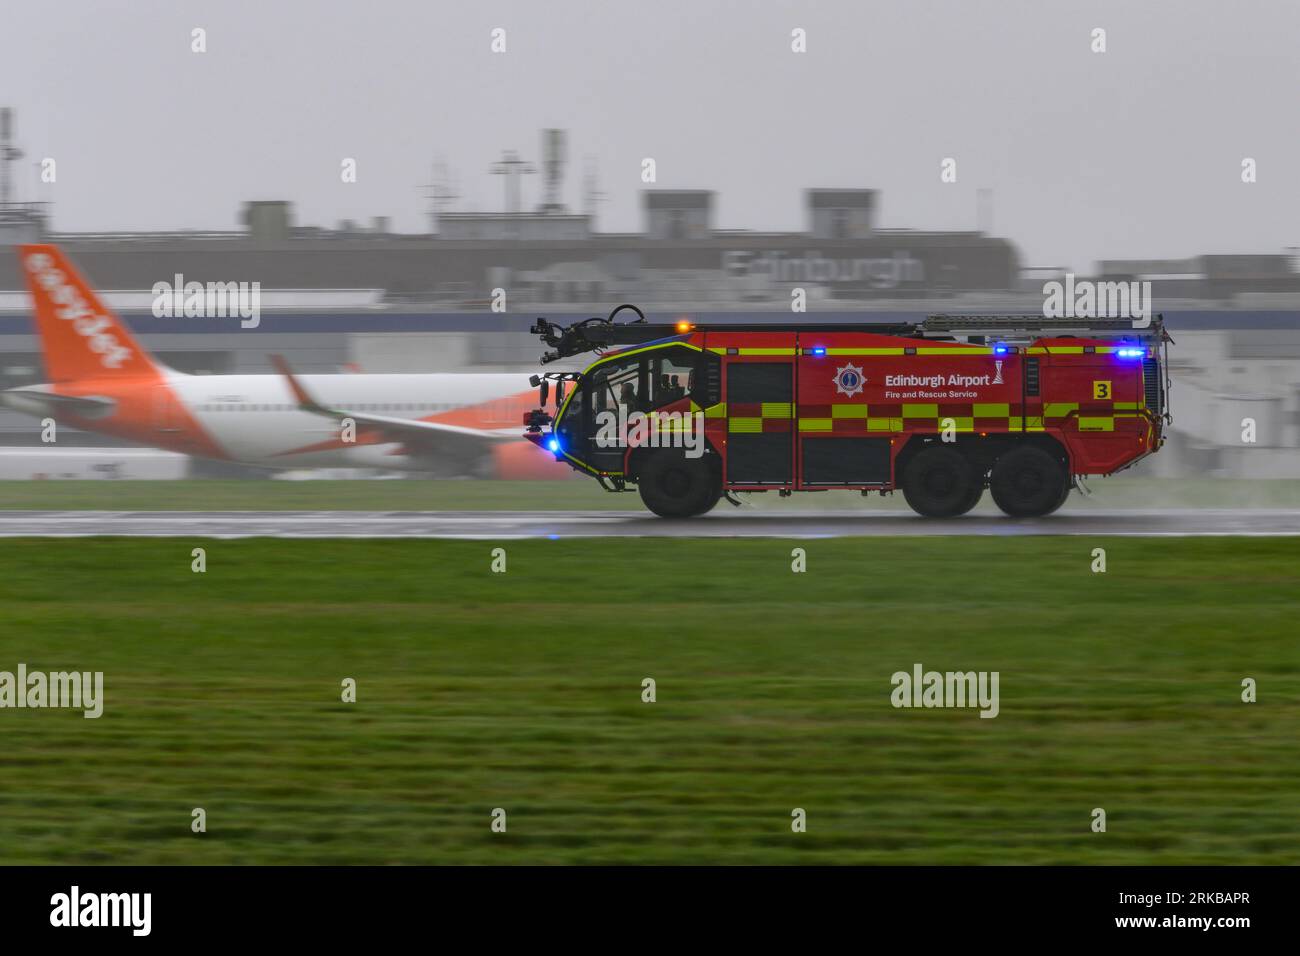 An Edinburgh Airport Fire Service Rosenbauer Panther Fire Truck Heads Down A Rain Soaked Runway During An Emergency Incident With A Qatar Airways A350 Stock Photo